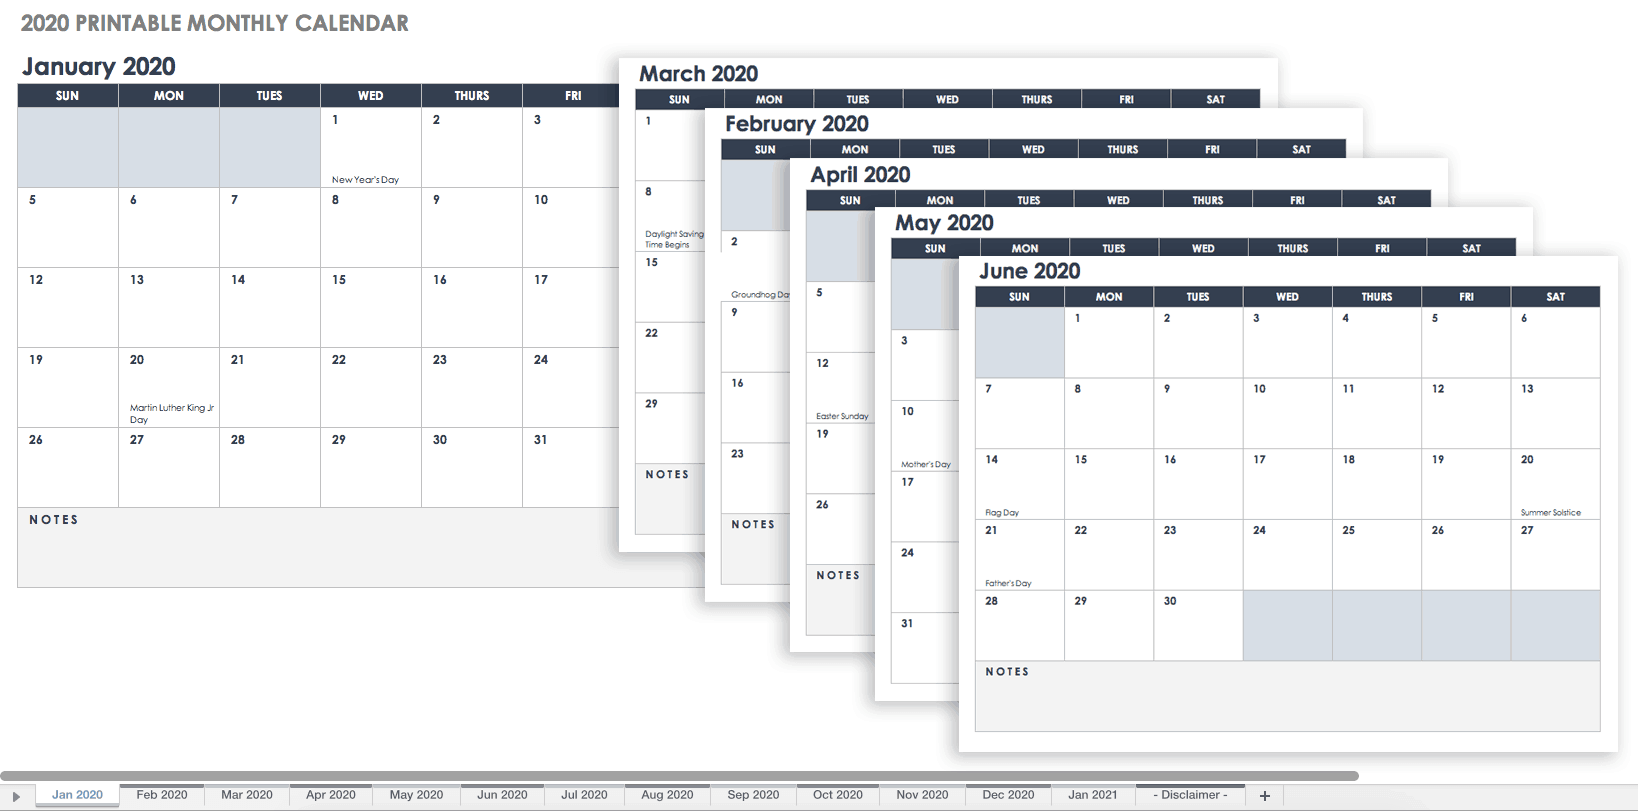 Calendario mensual 2020 para imprimir (horizontal)